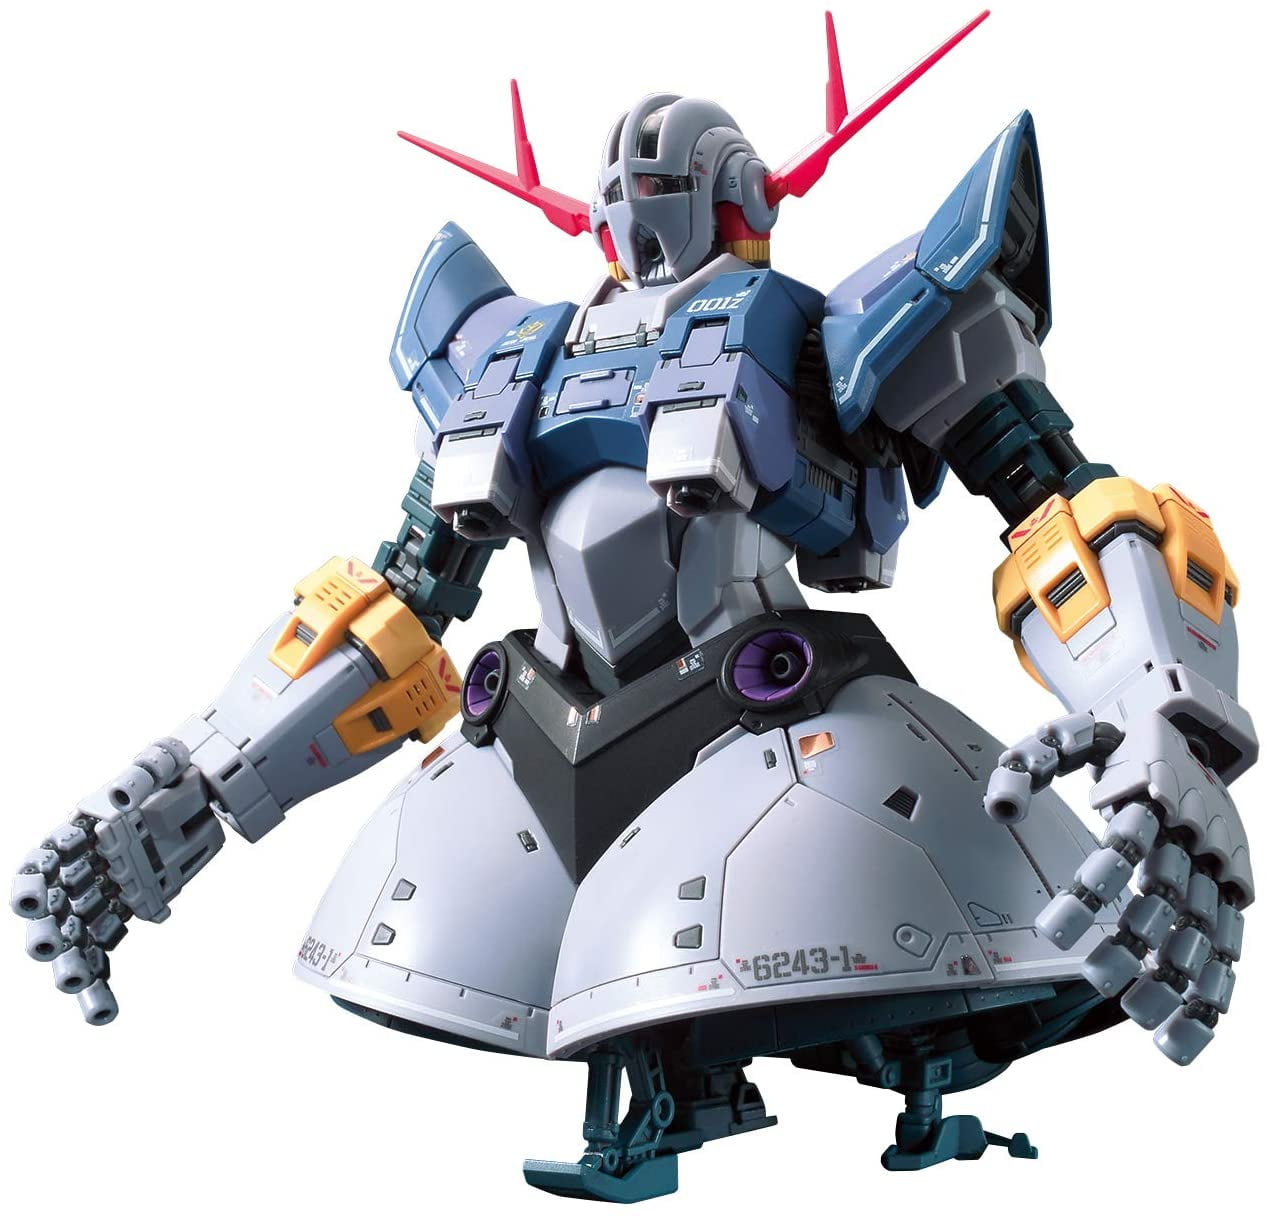 Bandai Hobby HGUC 1/144 40 Zaku II Mobile Suit Kit Model Gundam for sale online 